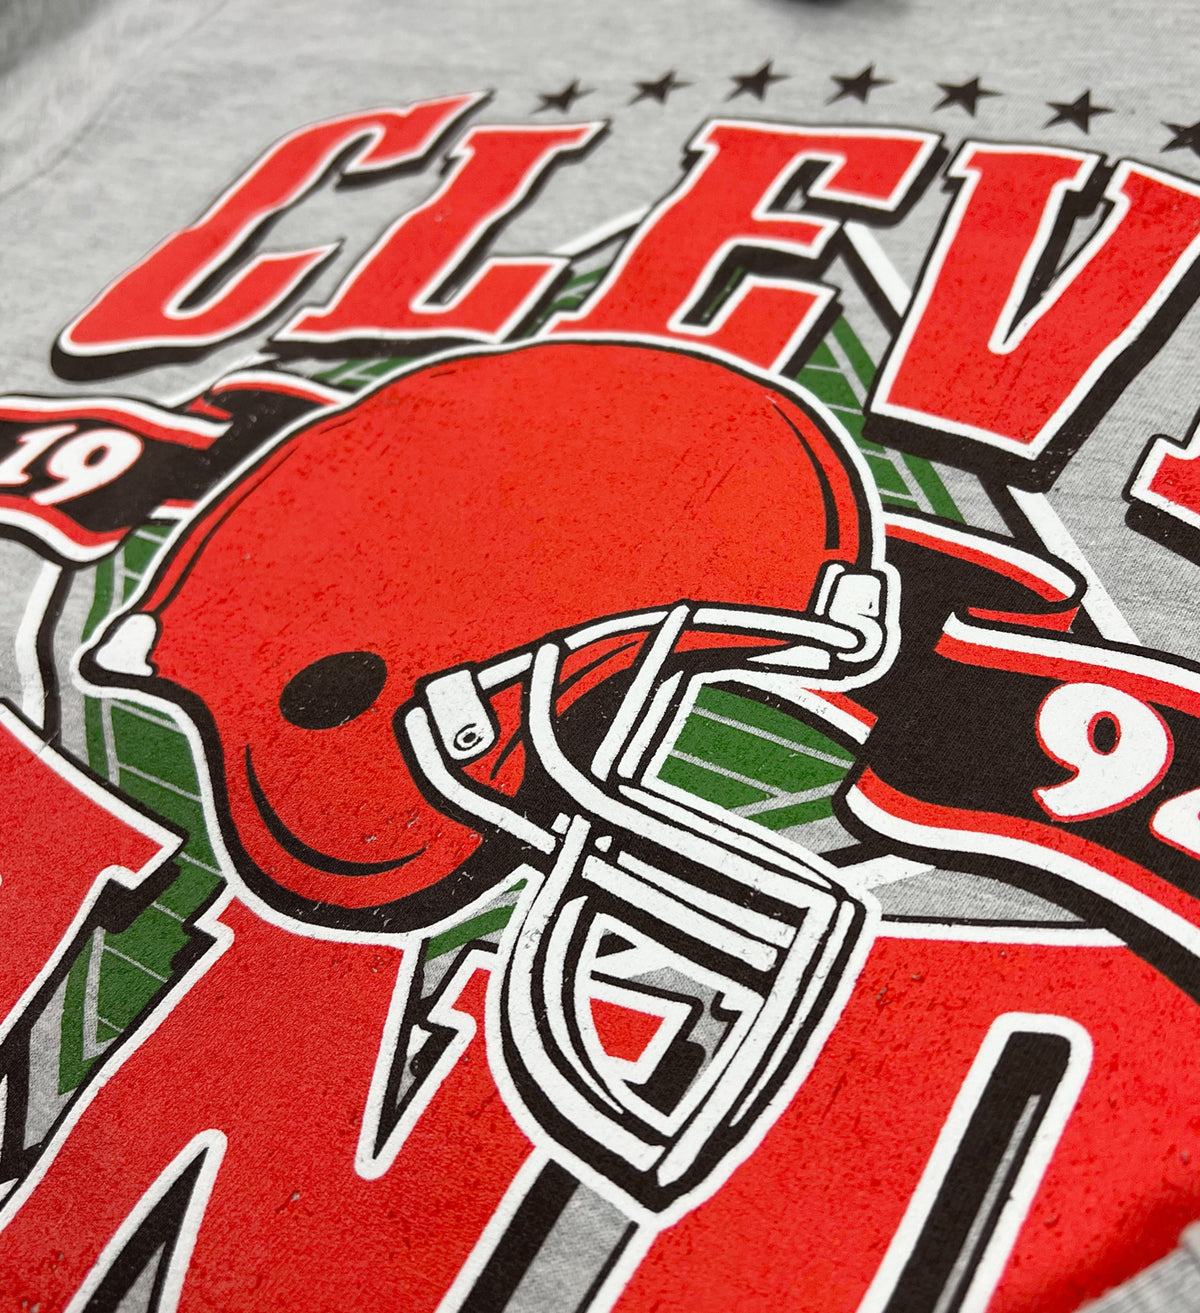 Grey Cleveland Football Vintage Crew Sweatshirt